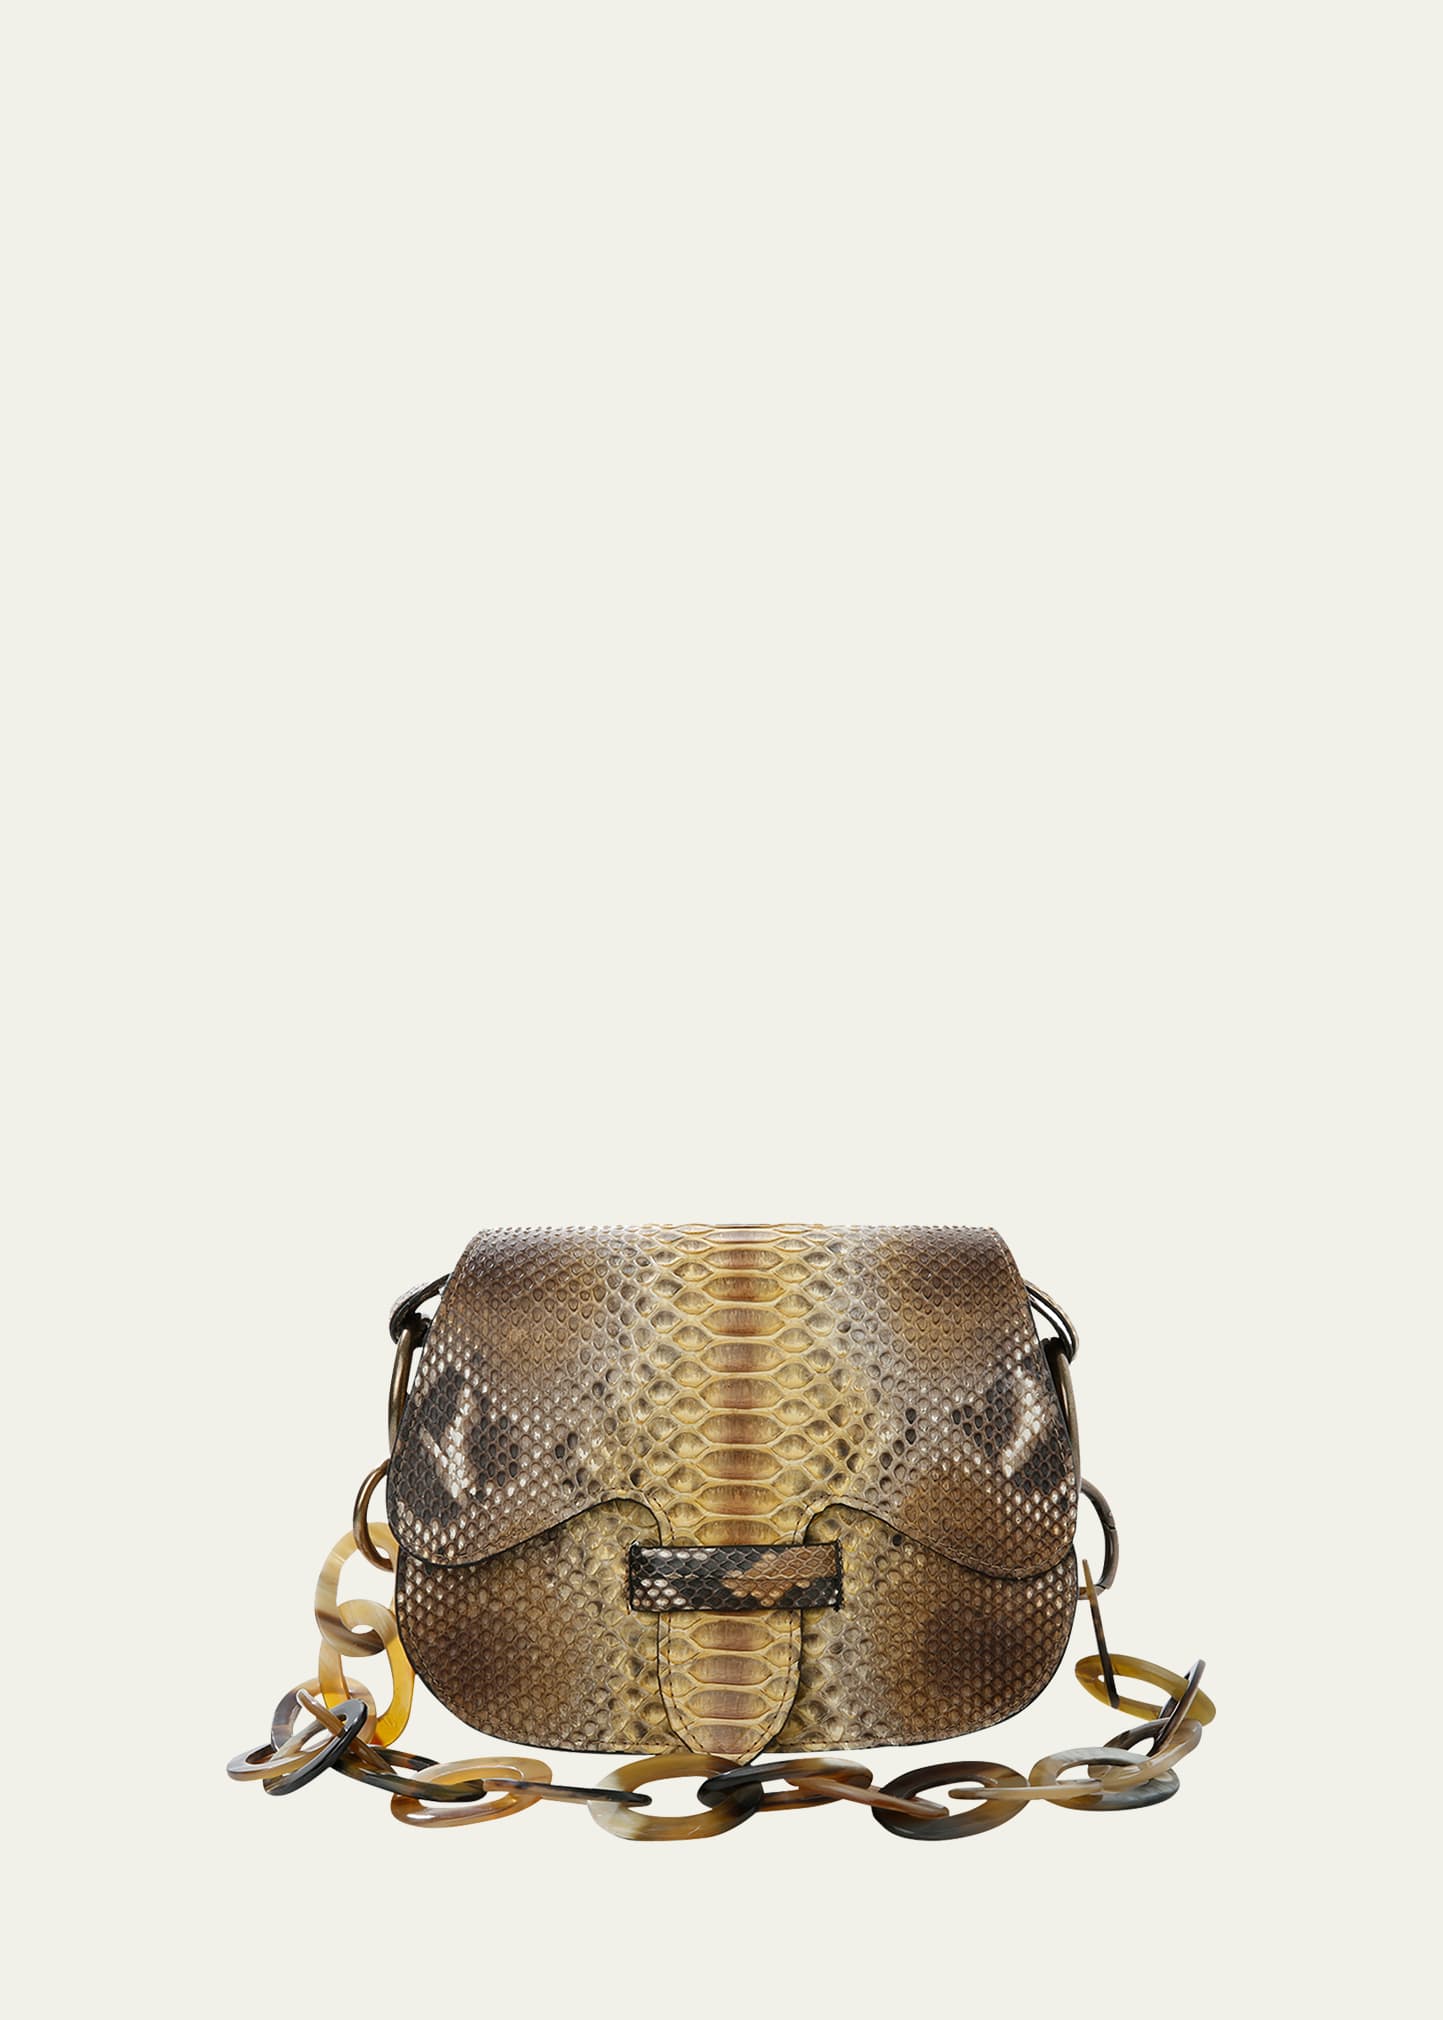 ADRIANA CASTRO Monsieur Python Saddle Shoulder Bag